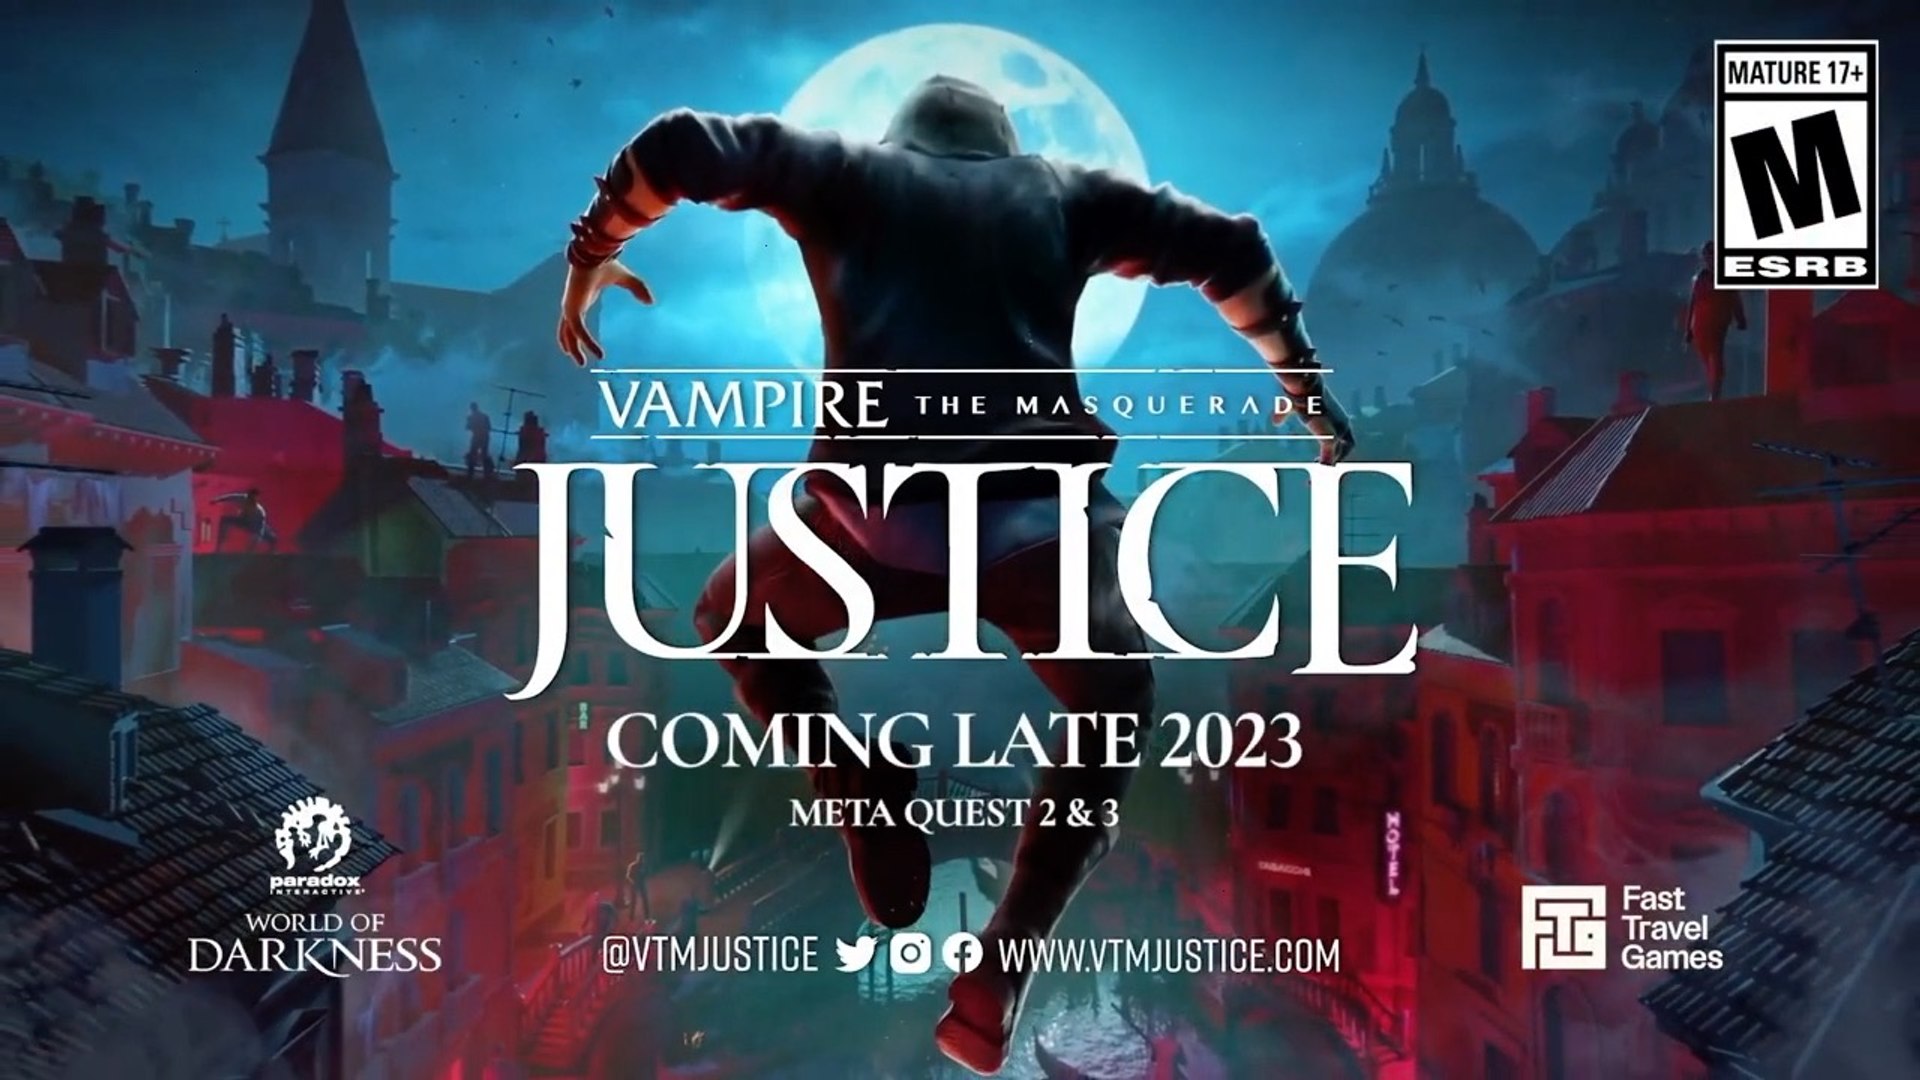 Vampire The Masquerade Coteries of New York Launch Trailer 